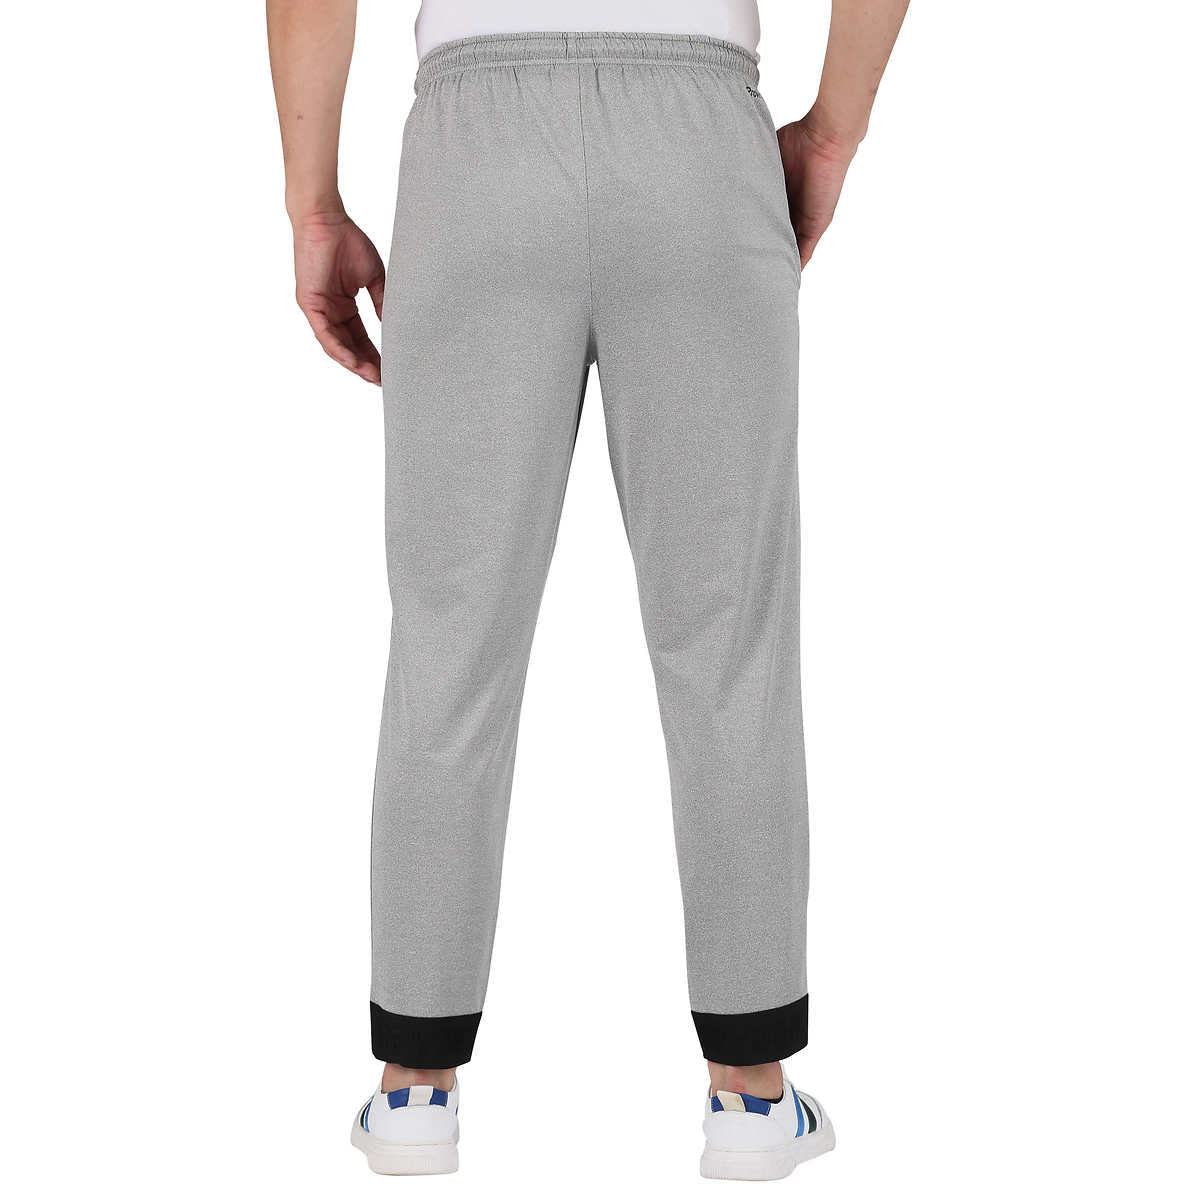 Spyder Active Men's Performance Drawstring Waistband Zip Pockets Active Pants Joggers